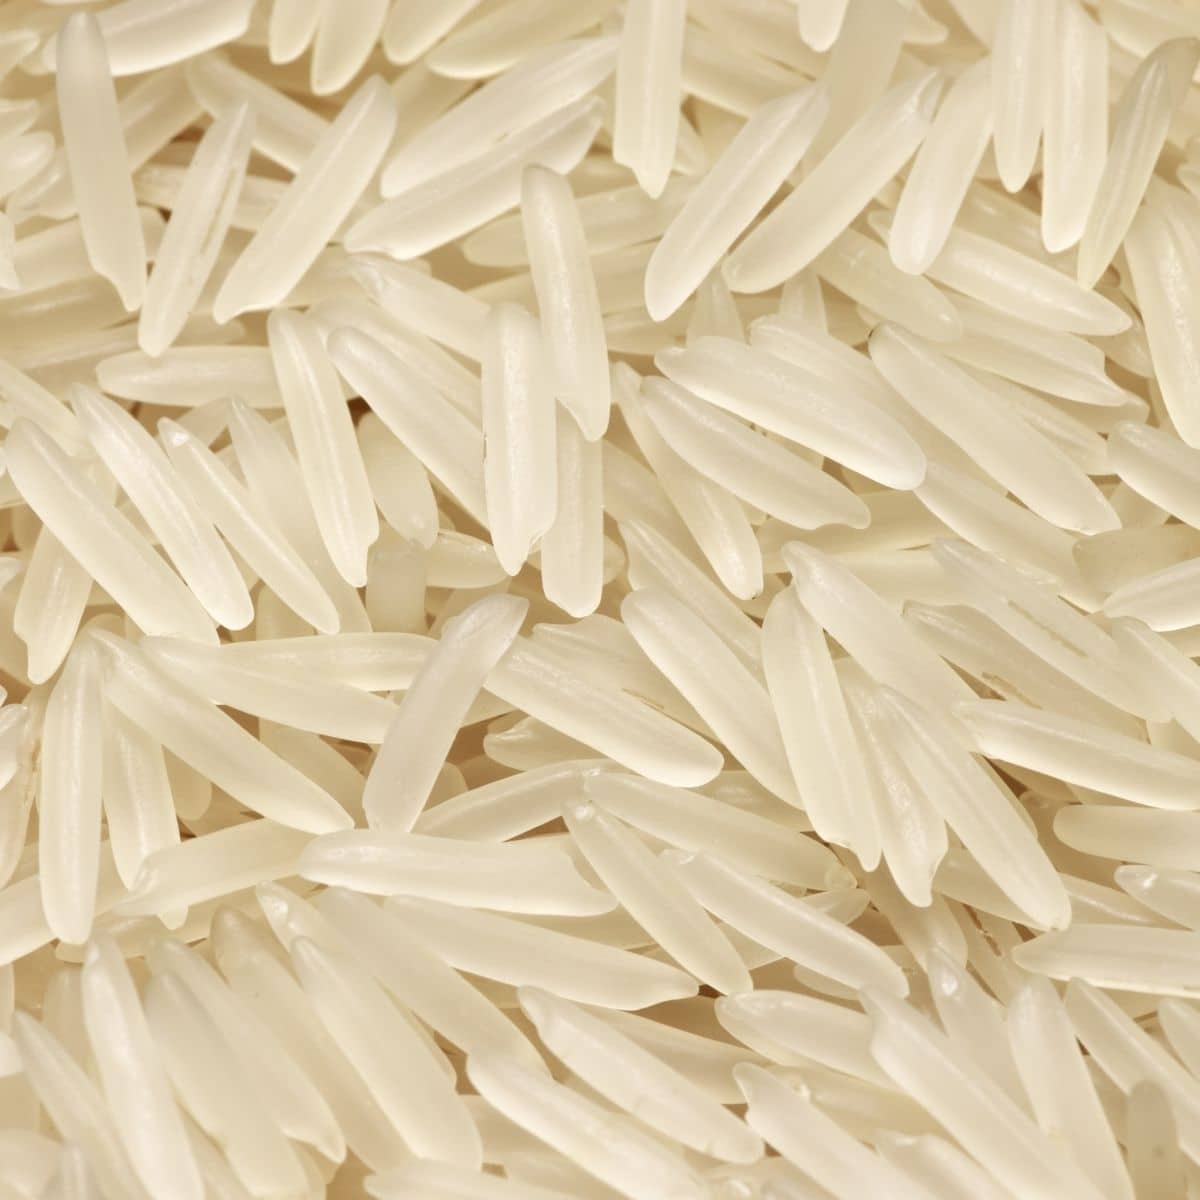 Basmati rice close up.